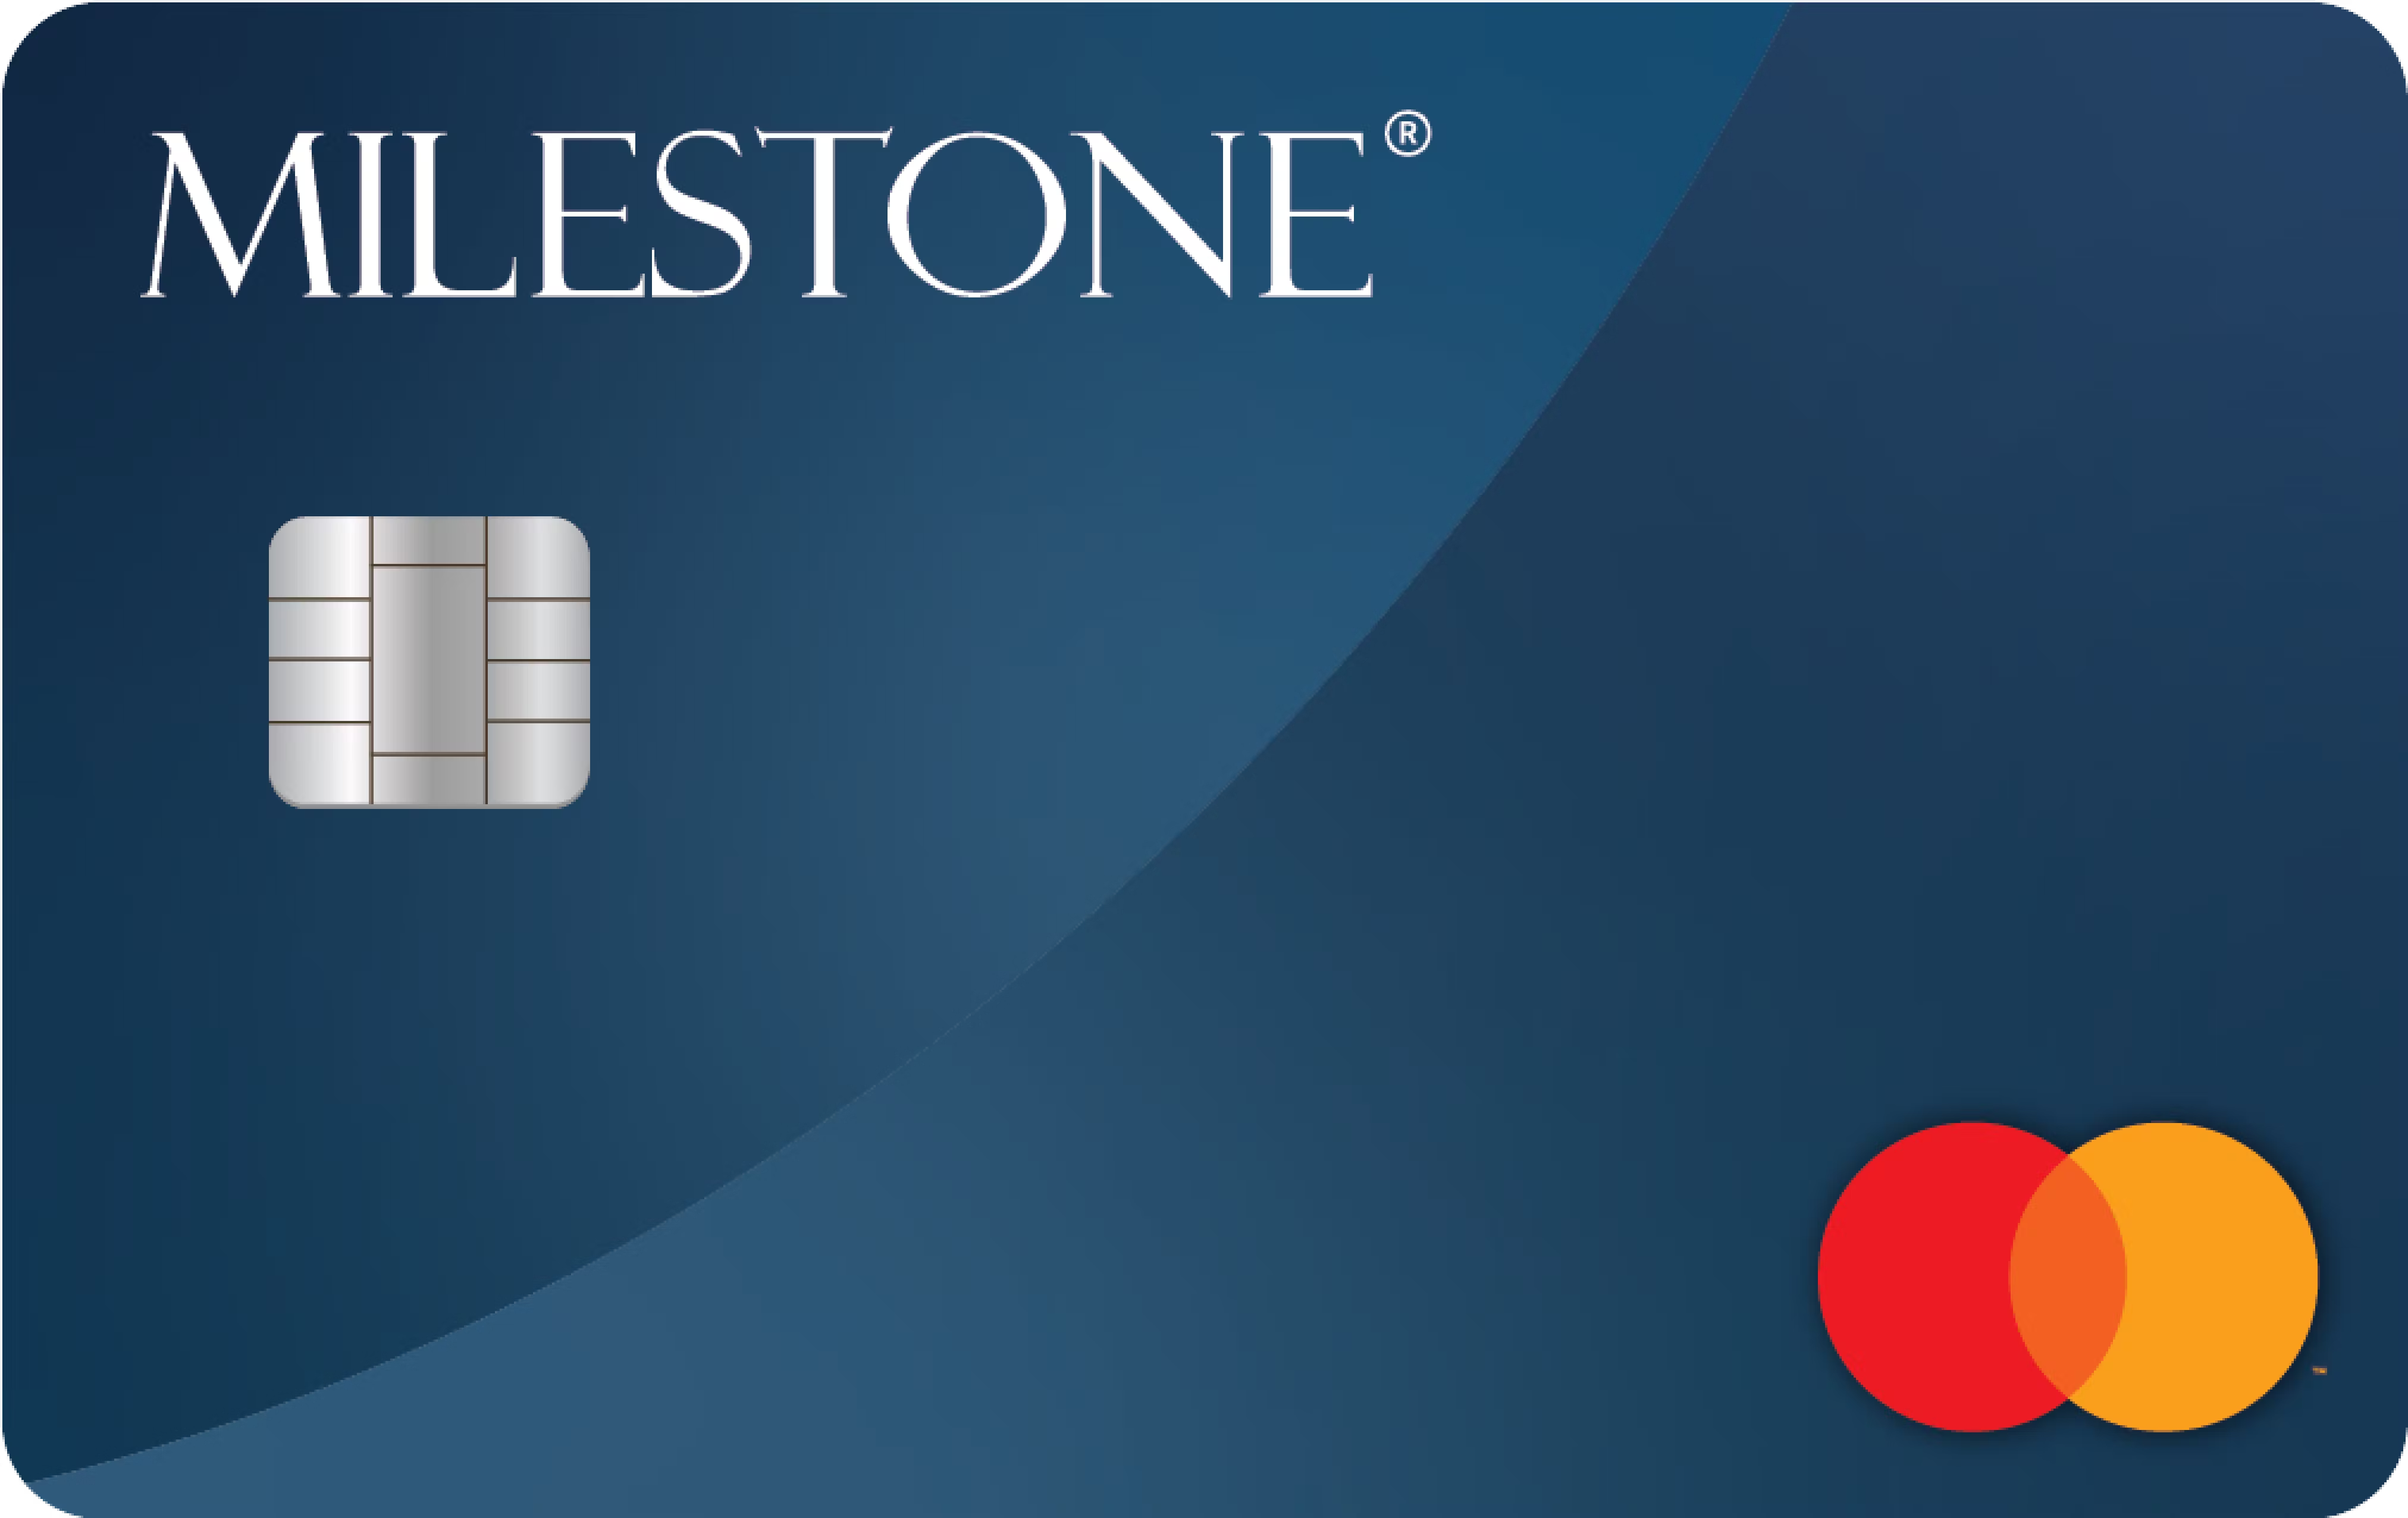 Milestone Mastercard full review